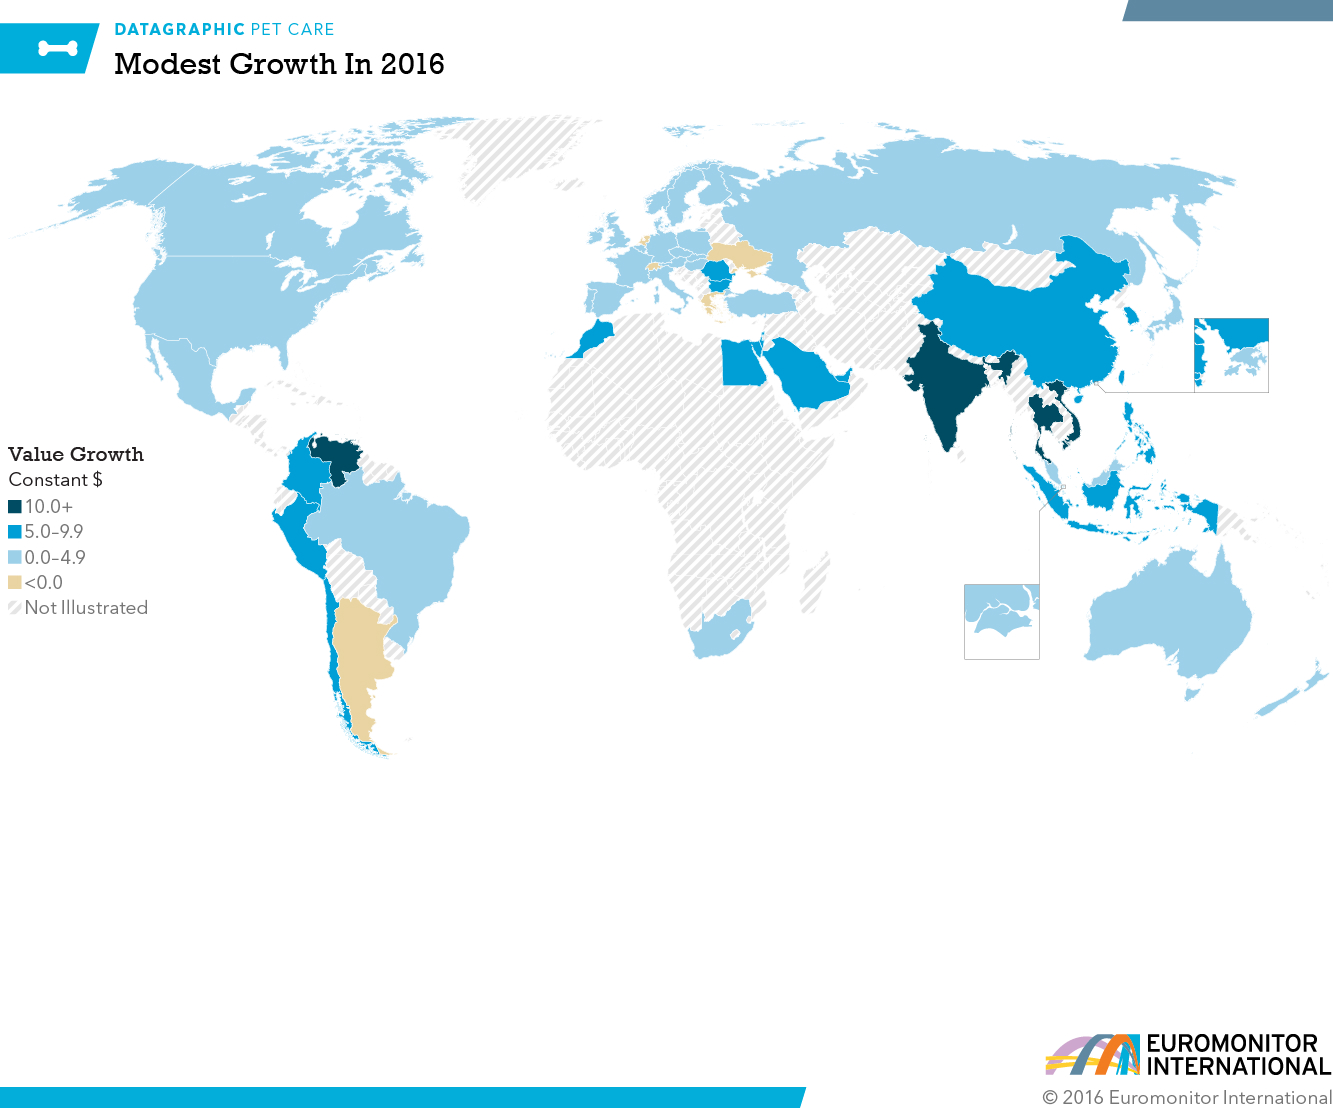 modest-growth-pet-care-market-map-global-2016